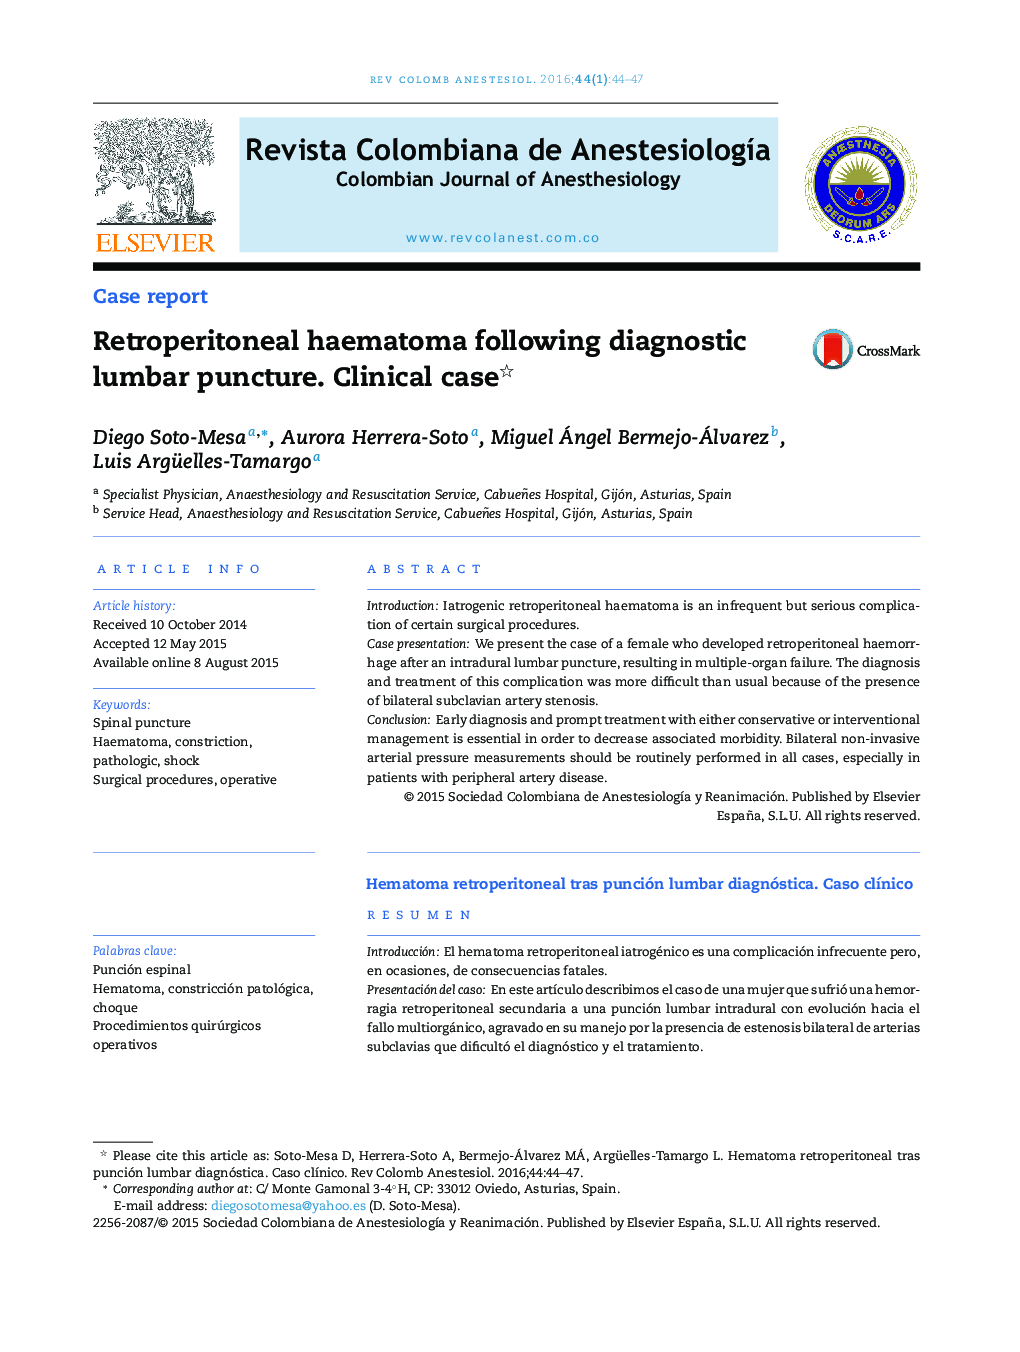 Retroperitoneal haematoma following diagnostic lumbar puncture. Clinical case